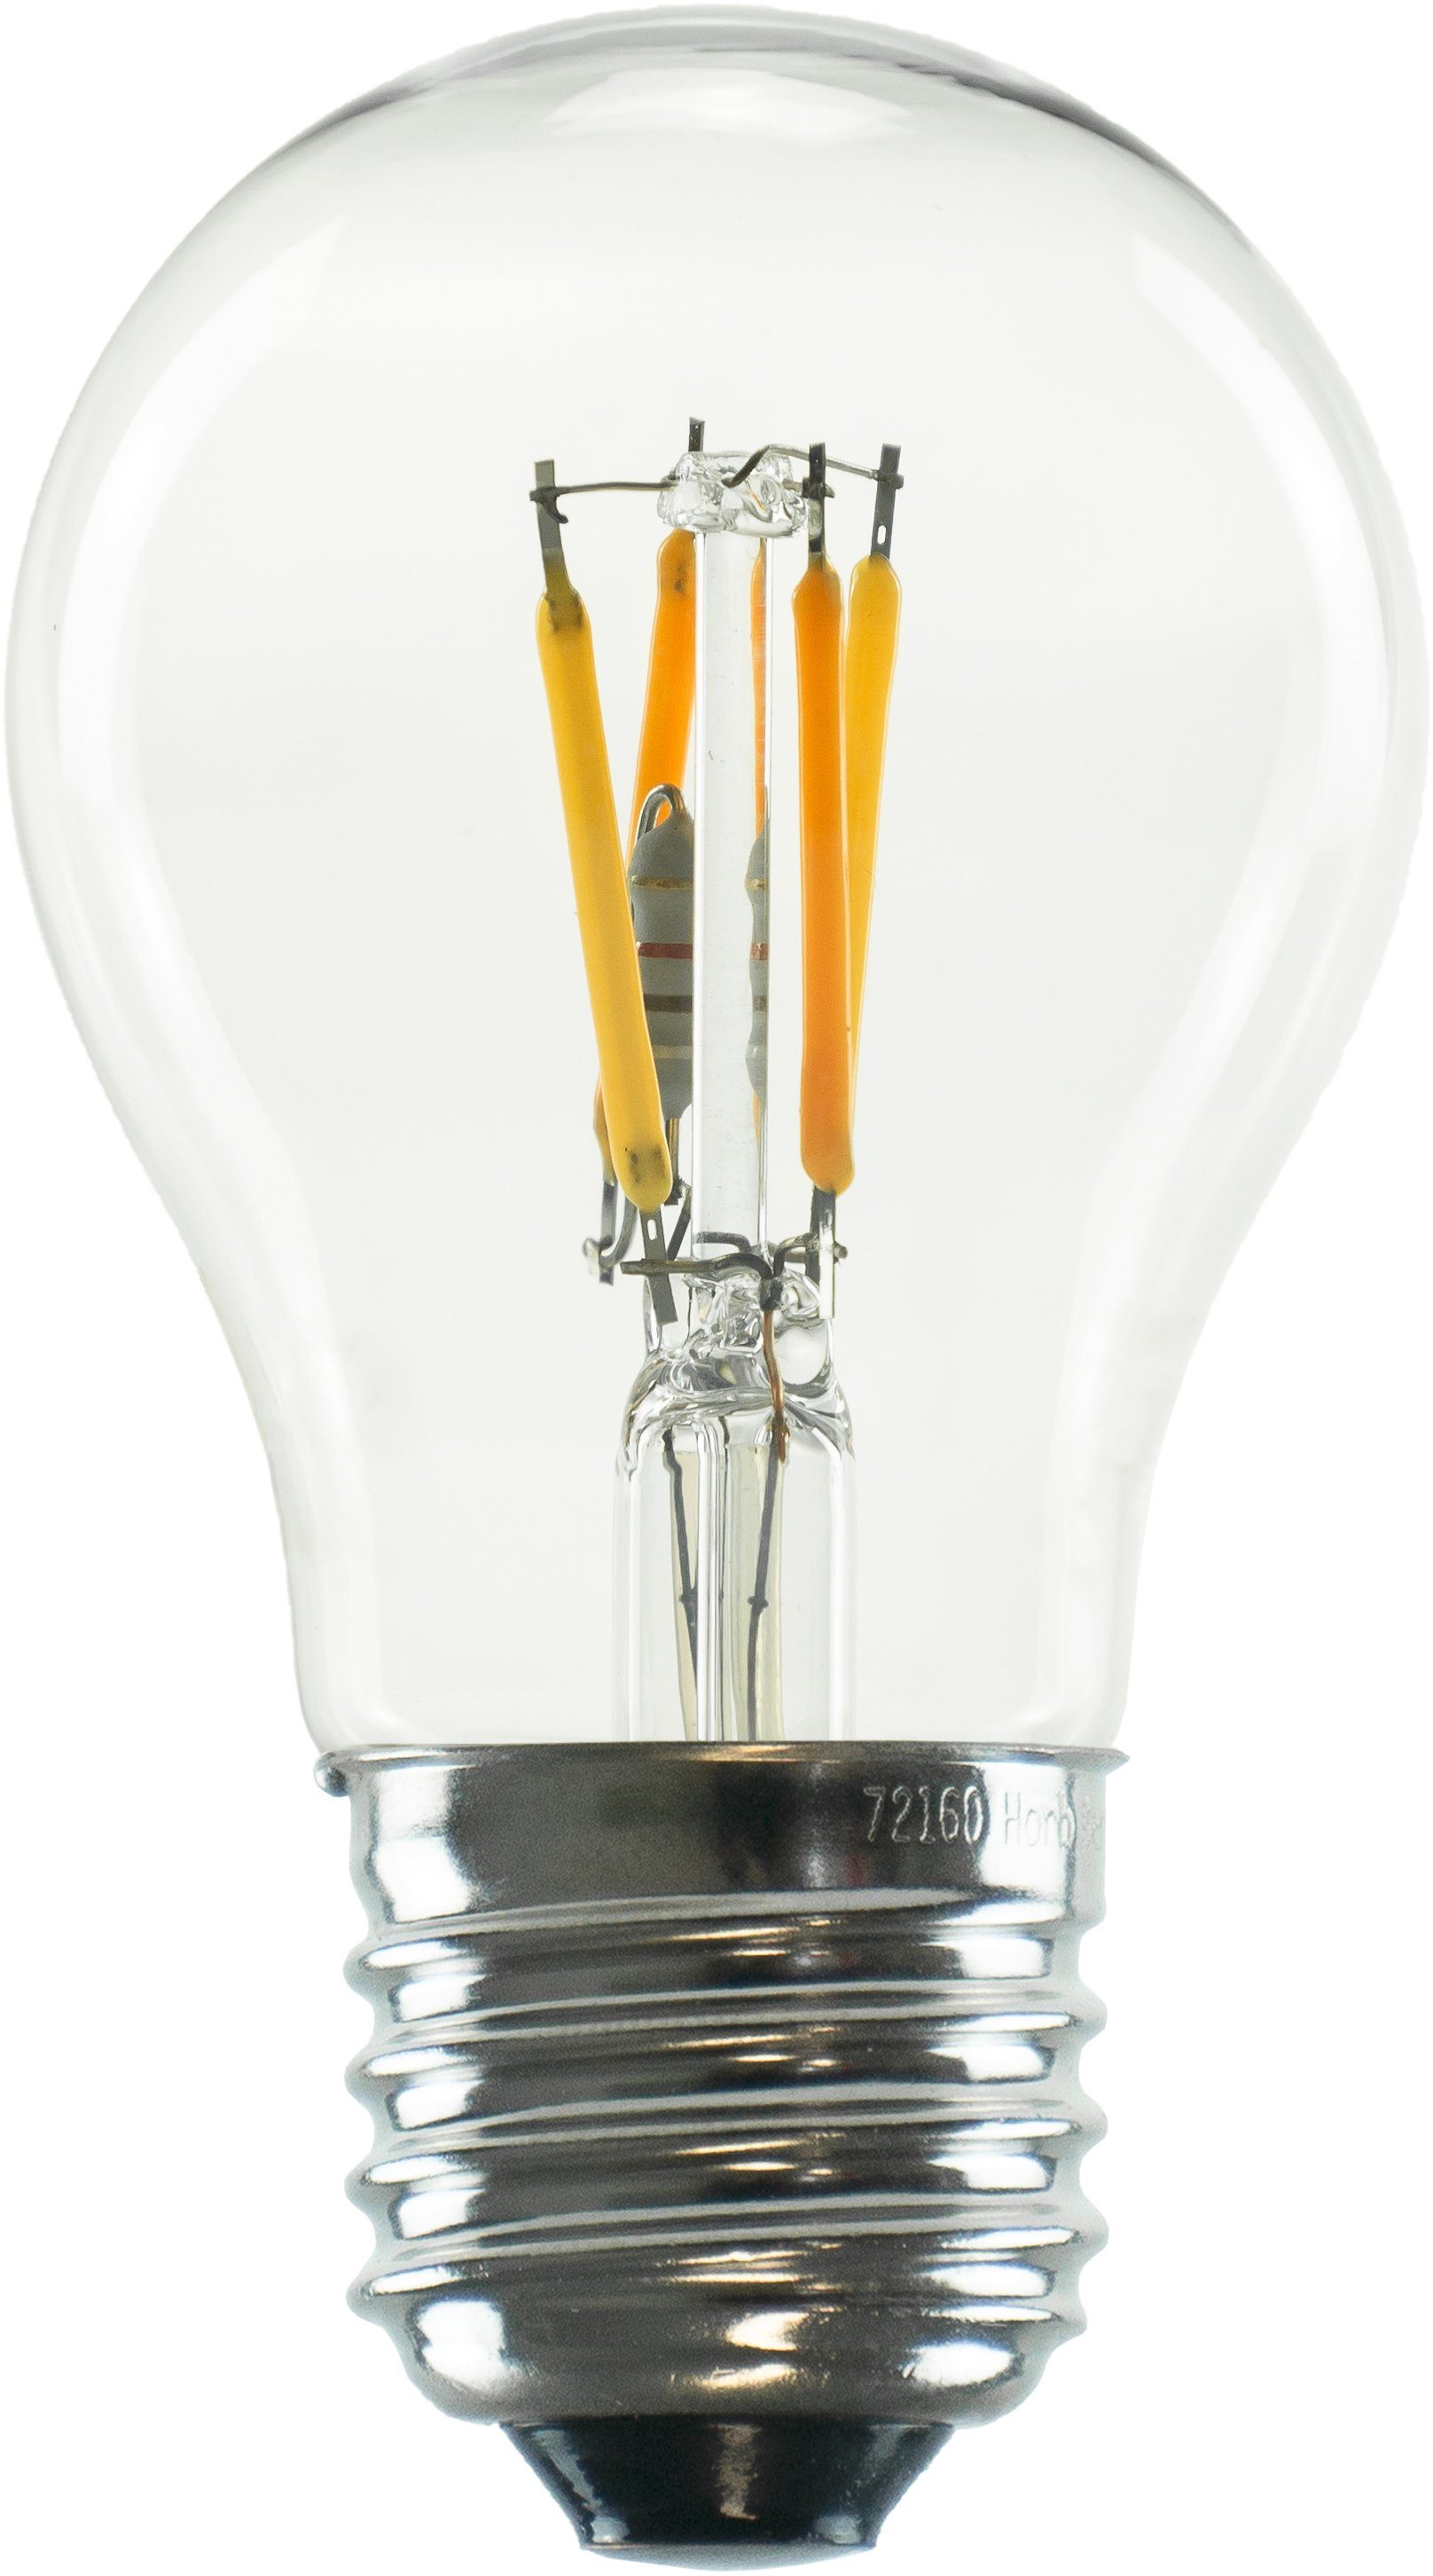 Ambient LED-Leuchtmittel SEGULA Glühlampe klein Dimming, E27 1 A15 Line, klar, St., E27, Ambient